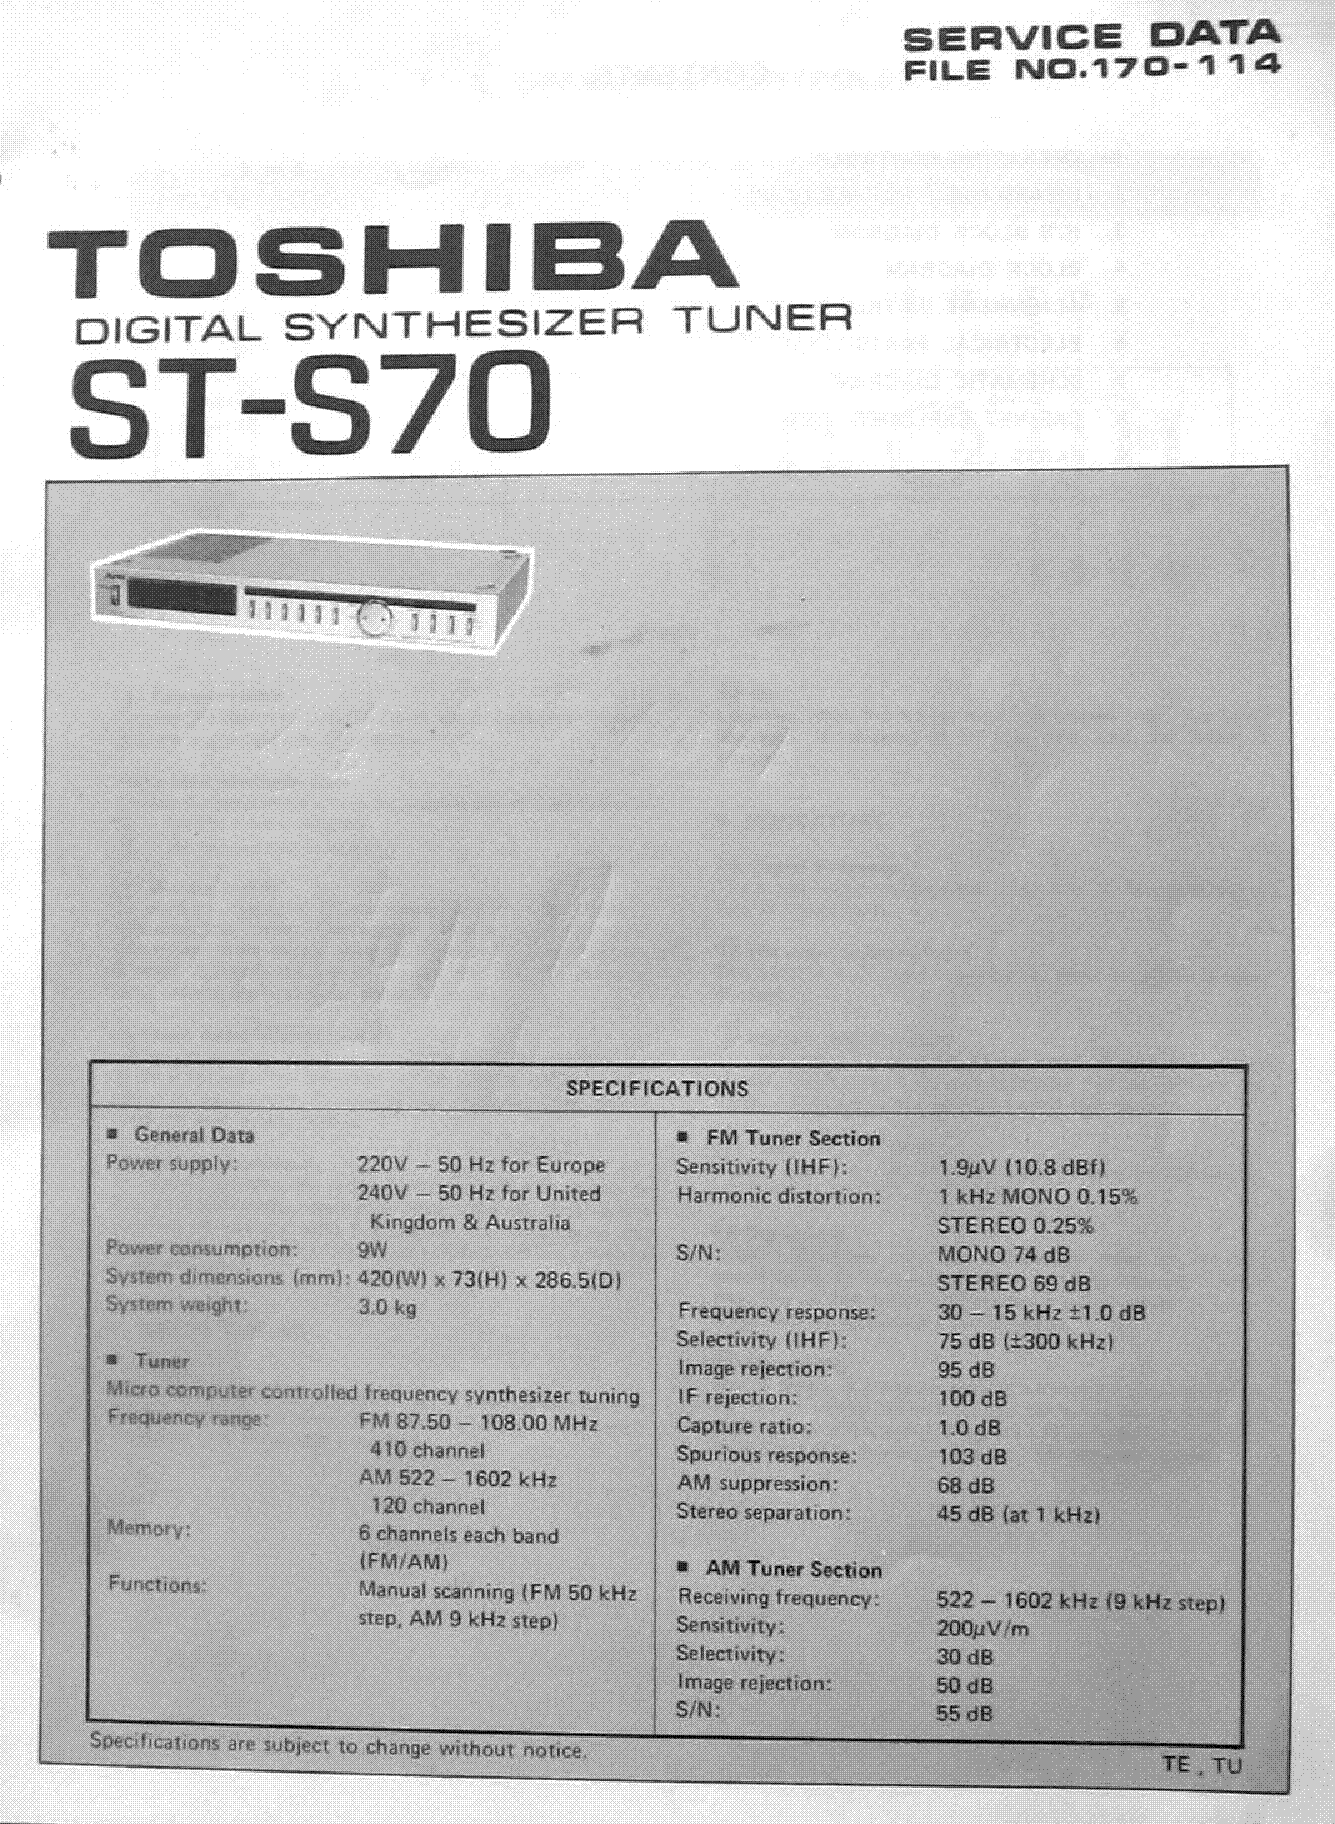 TOSHIBA ST-S70 SM service manual (1st page)